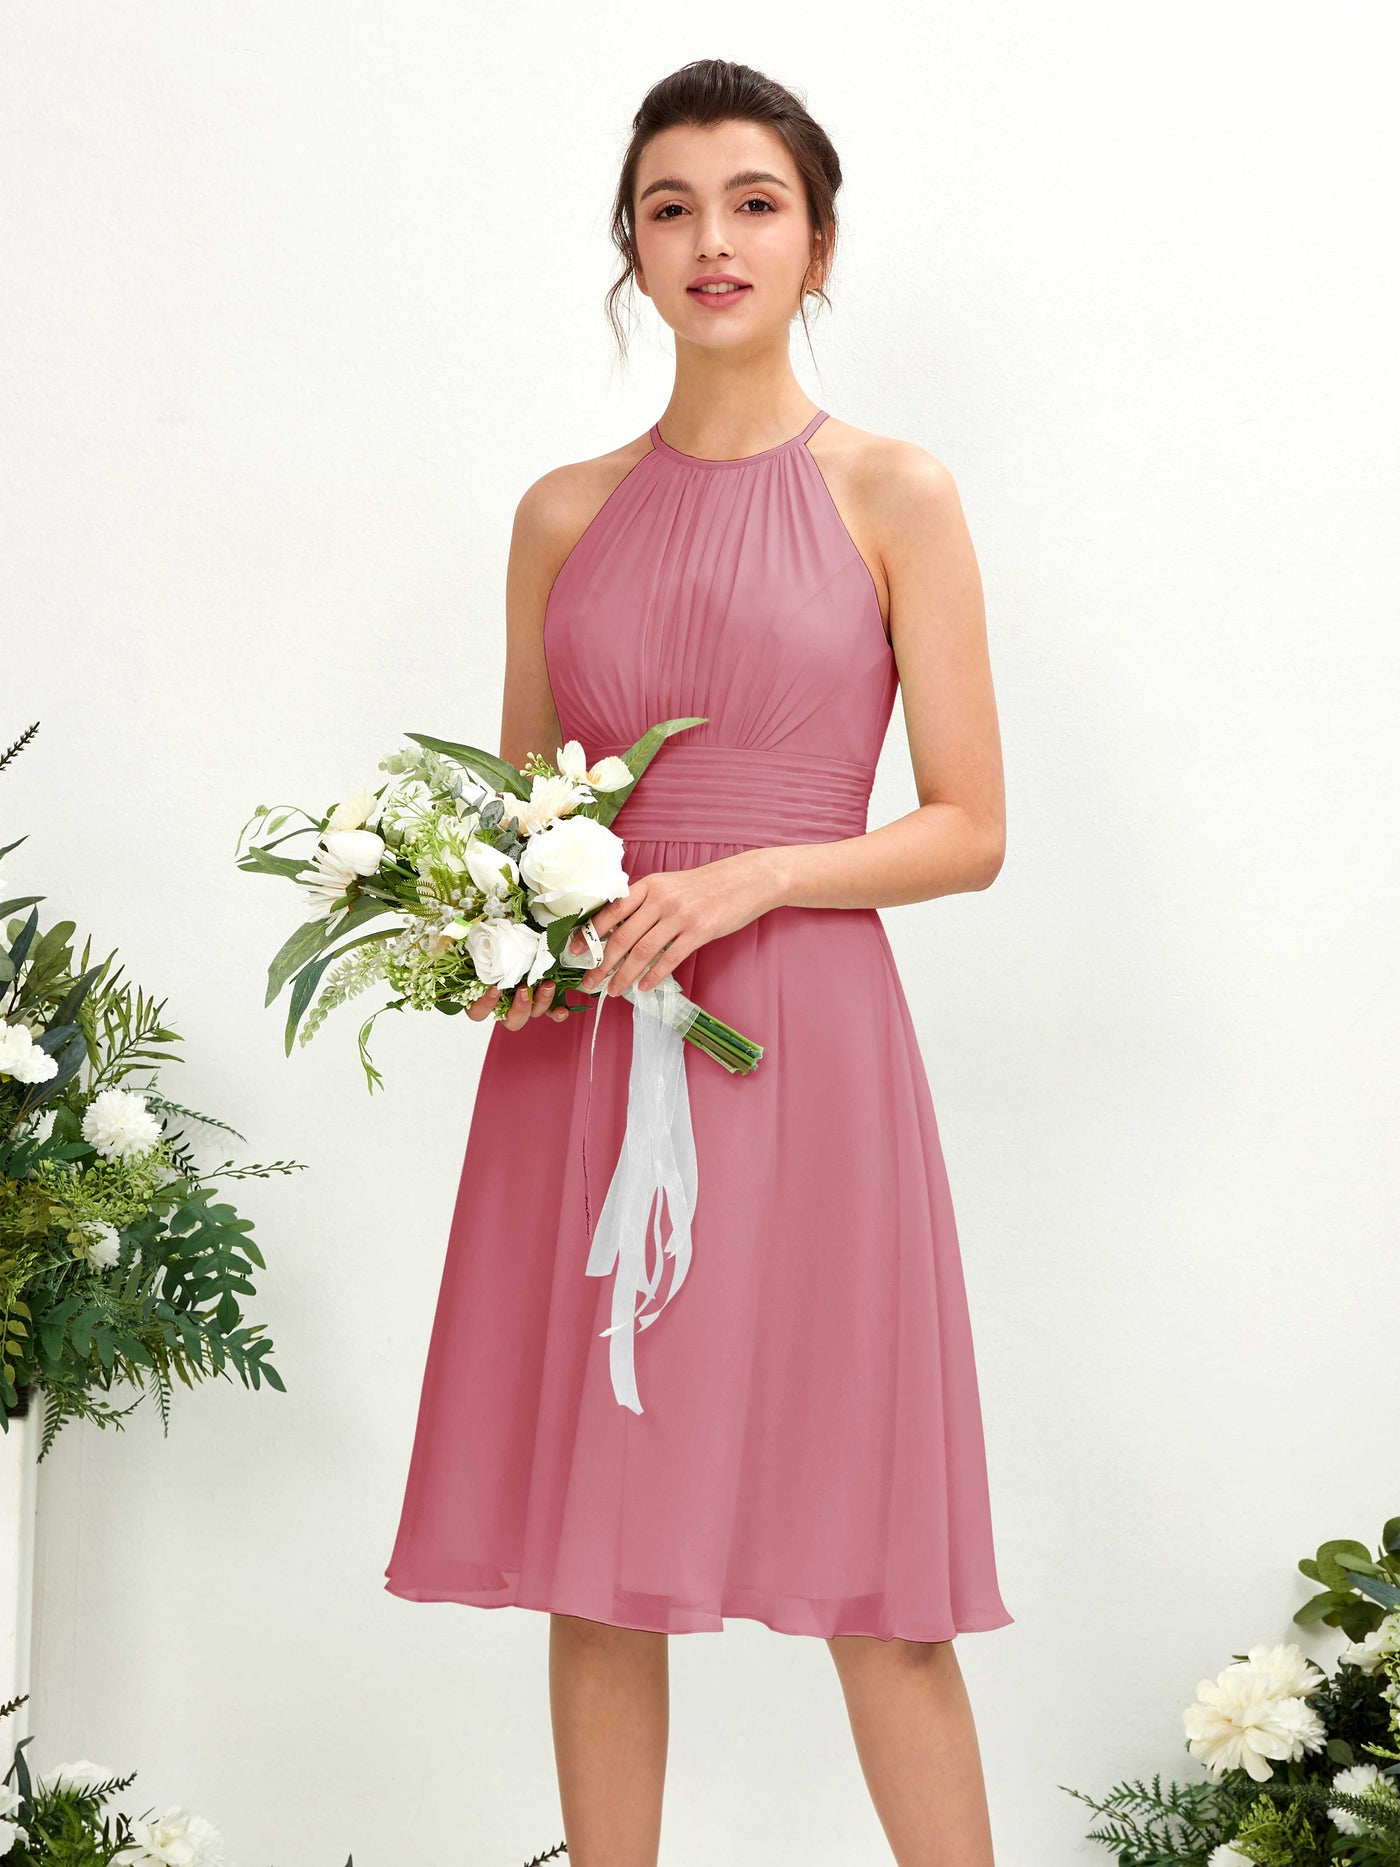 Desert Rose Bridesmaid Dresses Bridesmaid Dress A-line Chiffon Halter Knee Length Sleeveless Wedding Party Dress (81220111)#color_desert-rose